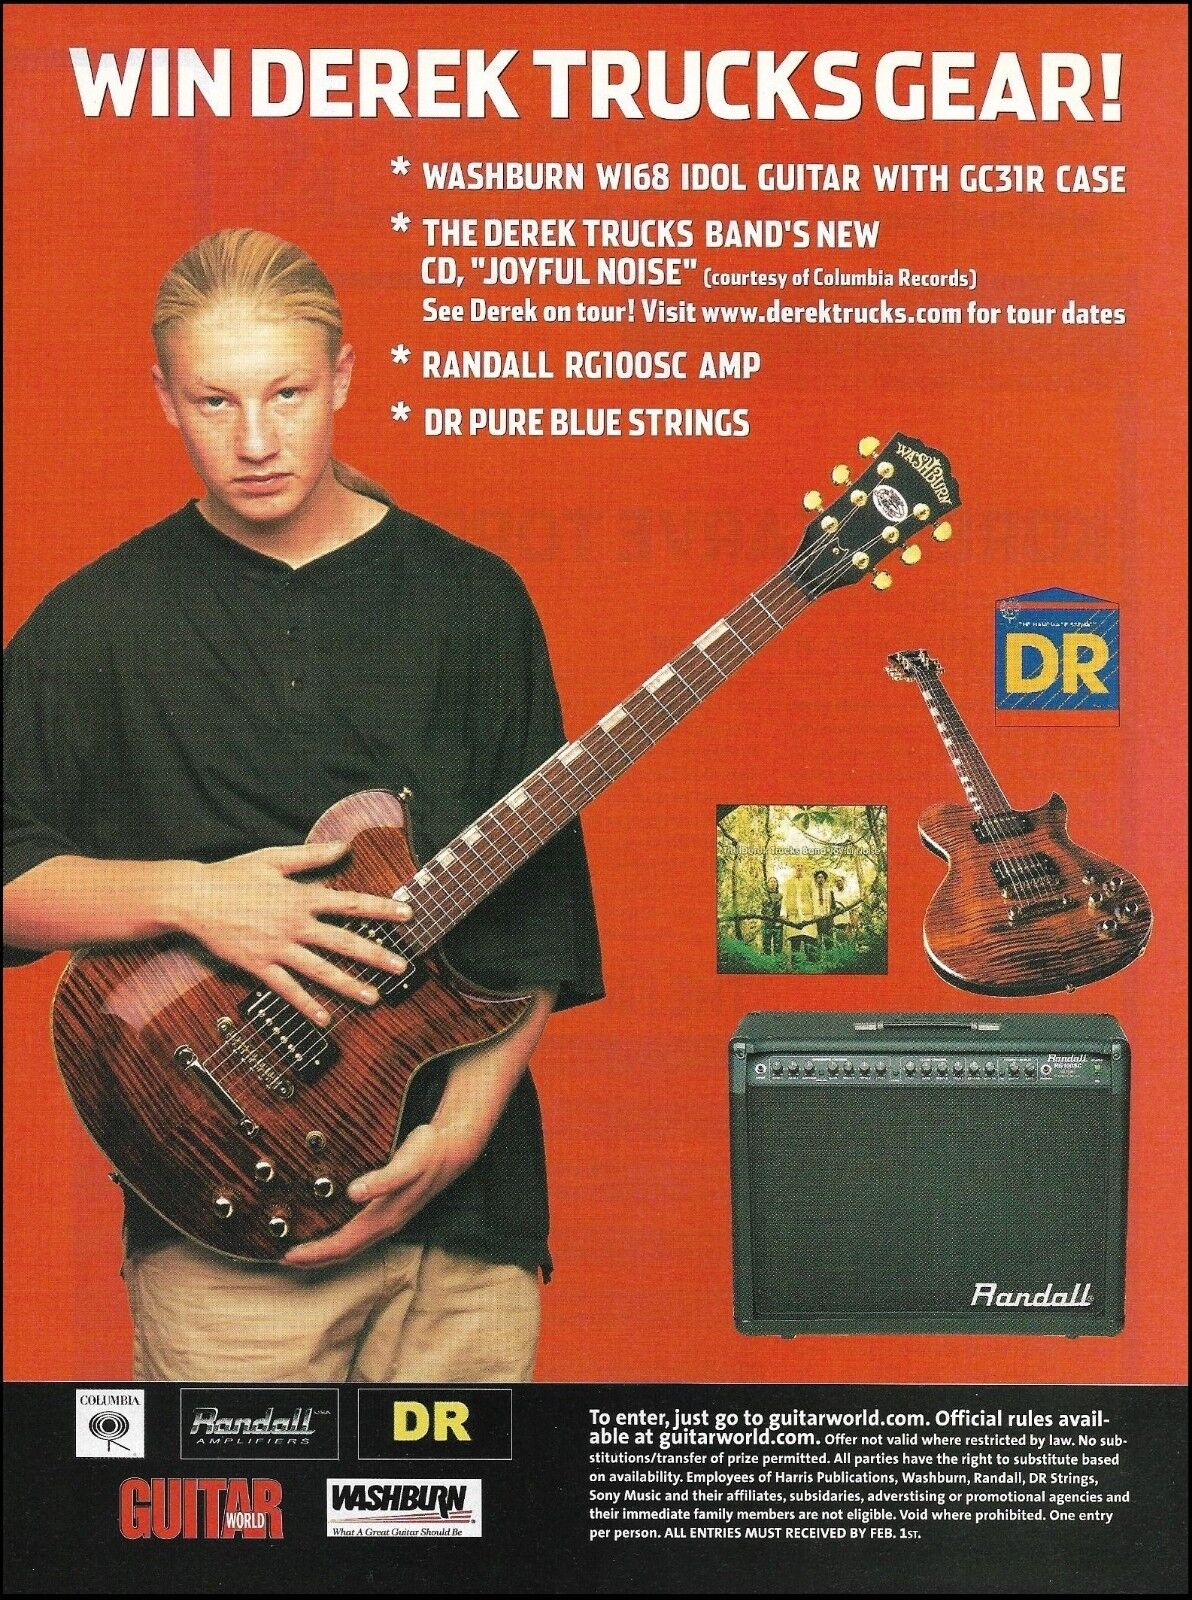 Allman Brothers Derek Trucks Band Washburn WI68 Idol guitar 2003 contest ad